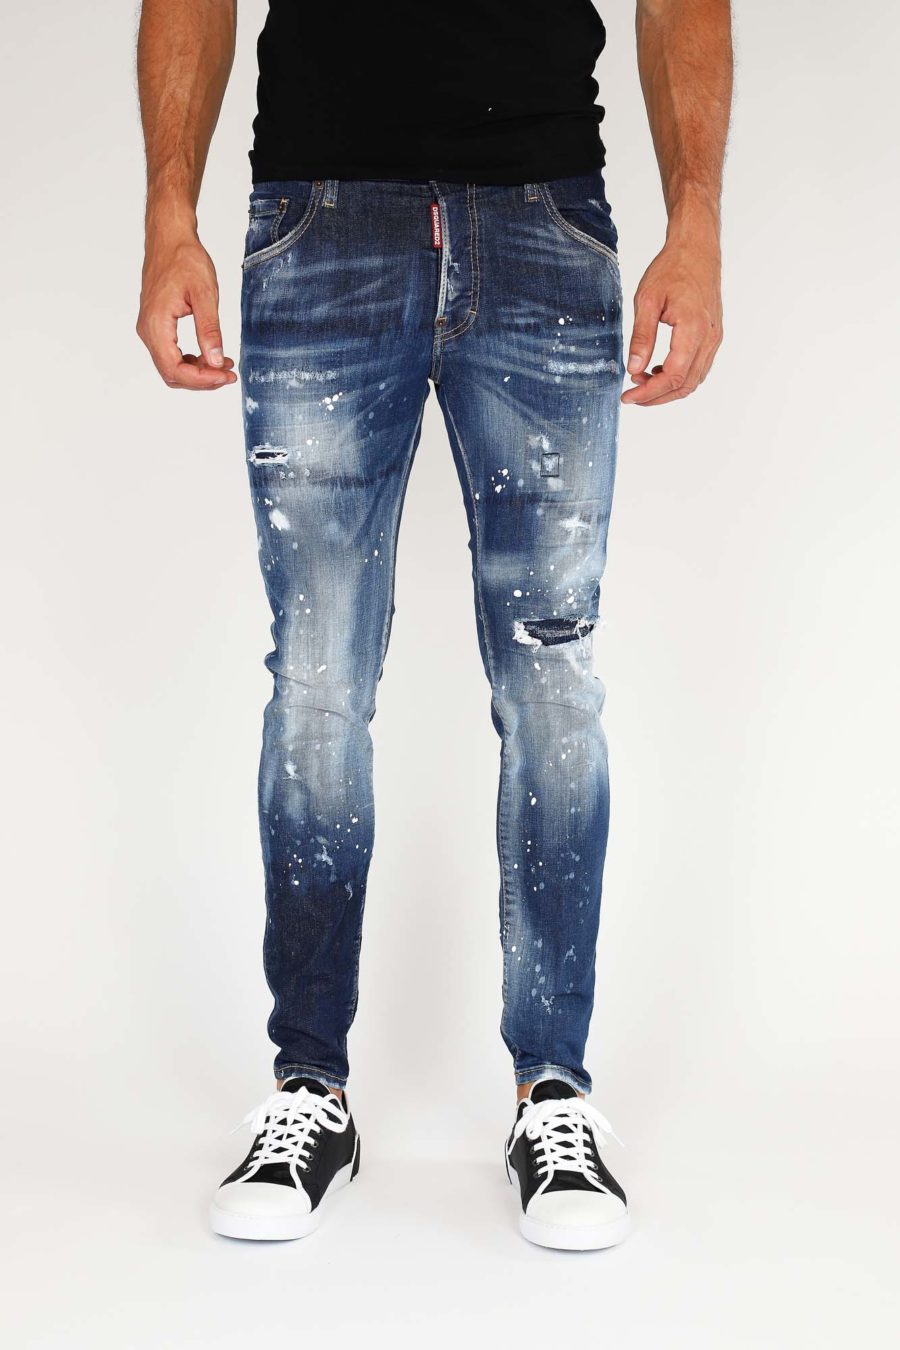 Dsquared2 - Super twinky jeans in dark blue - BLS Fashion